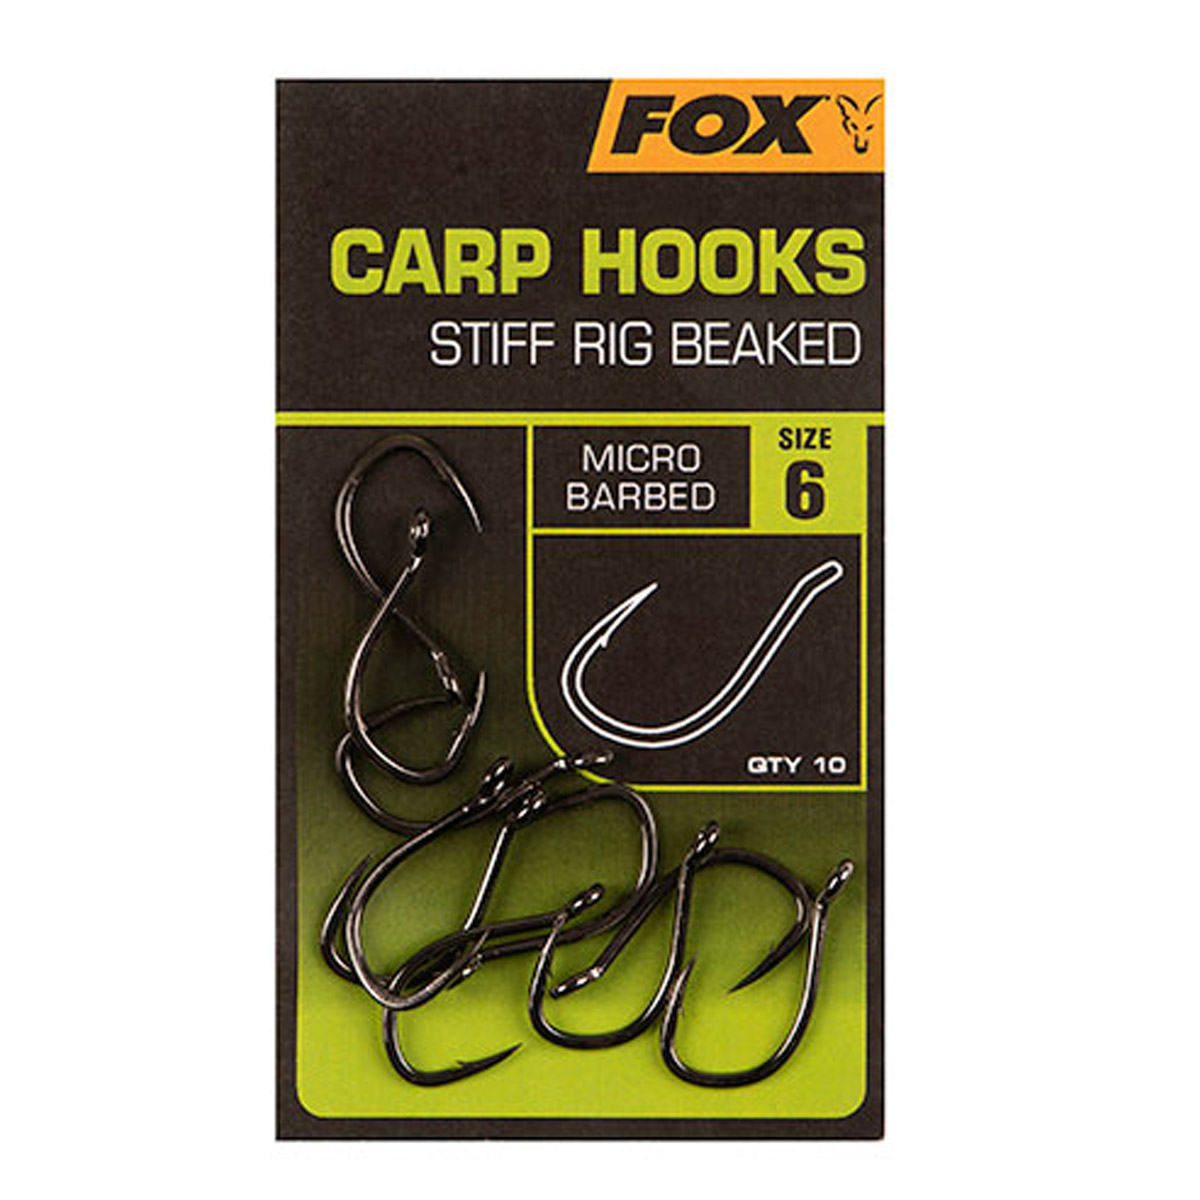 Fox Carp Hook STIFF RIG BEAKED